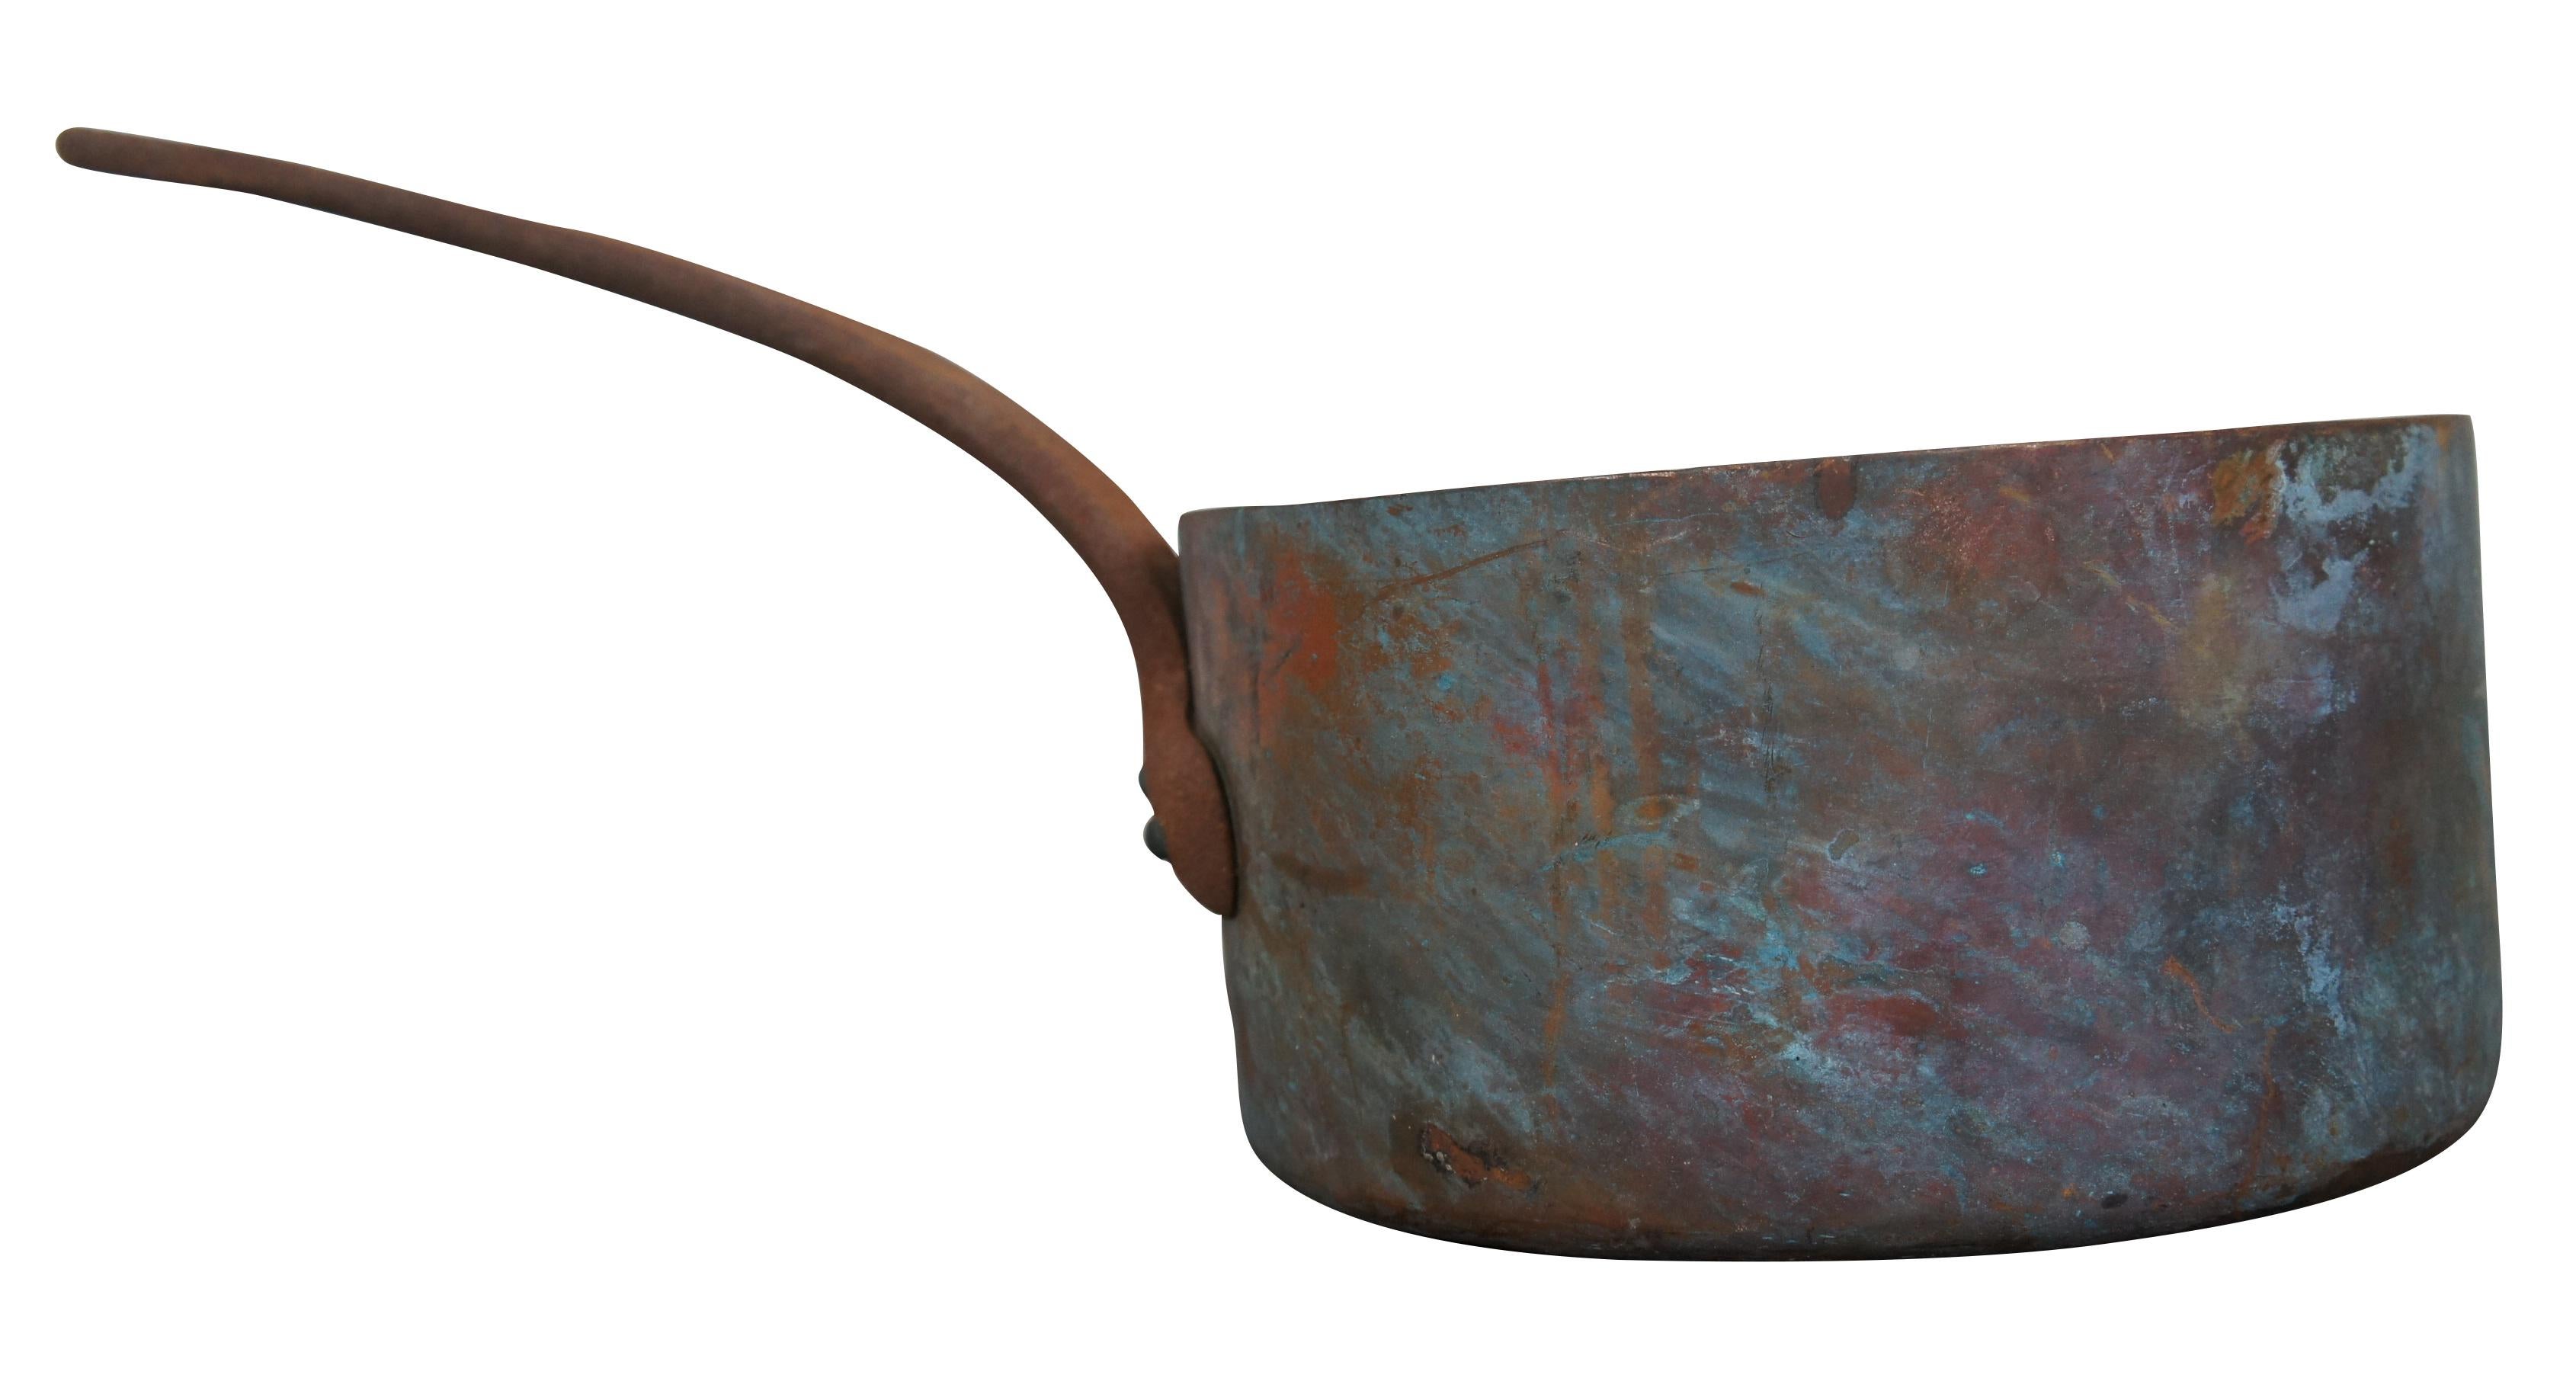 Antique French copper sauce or saute pan / pot featuring a cast iron handle. Measure:19